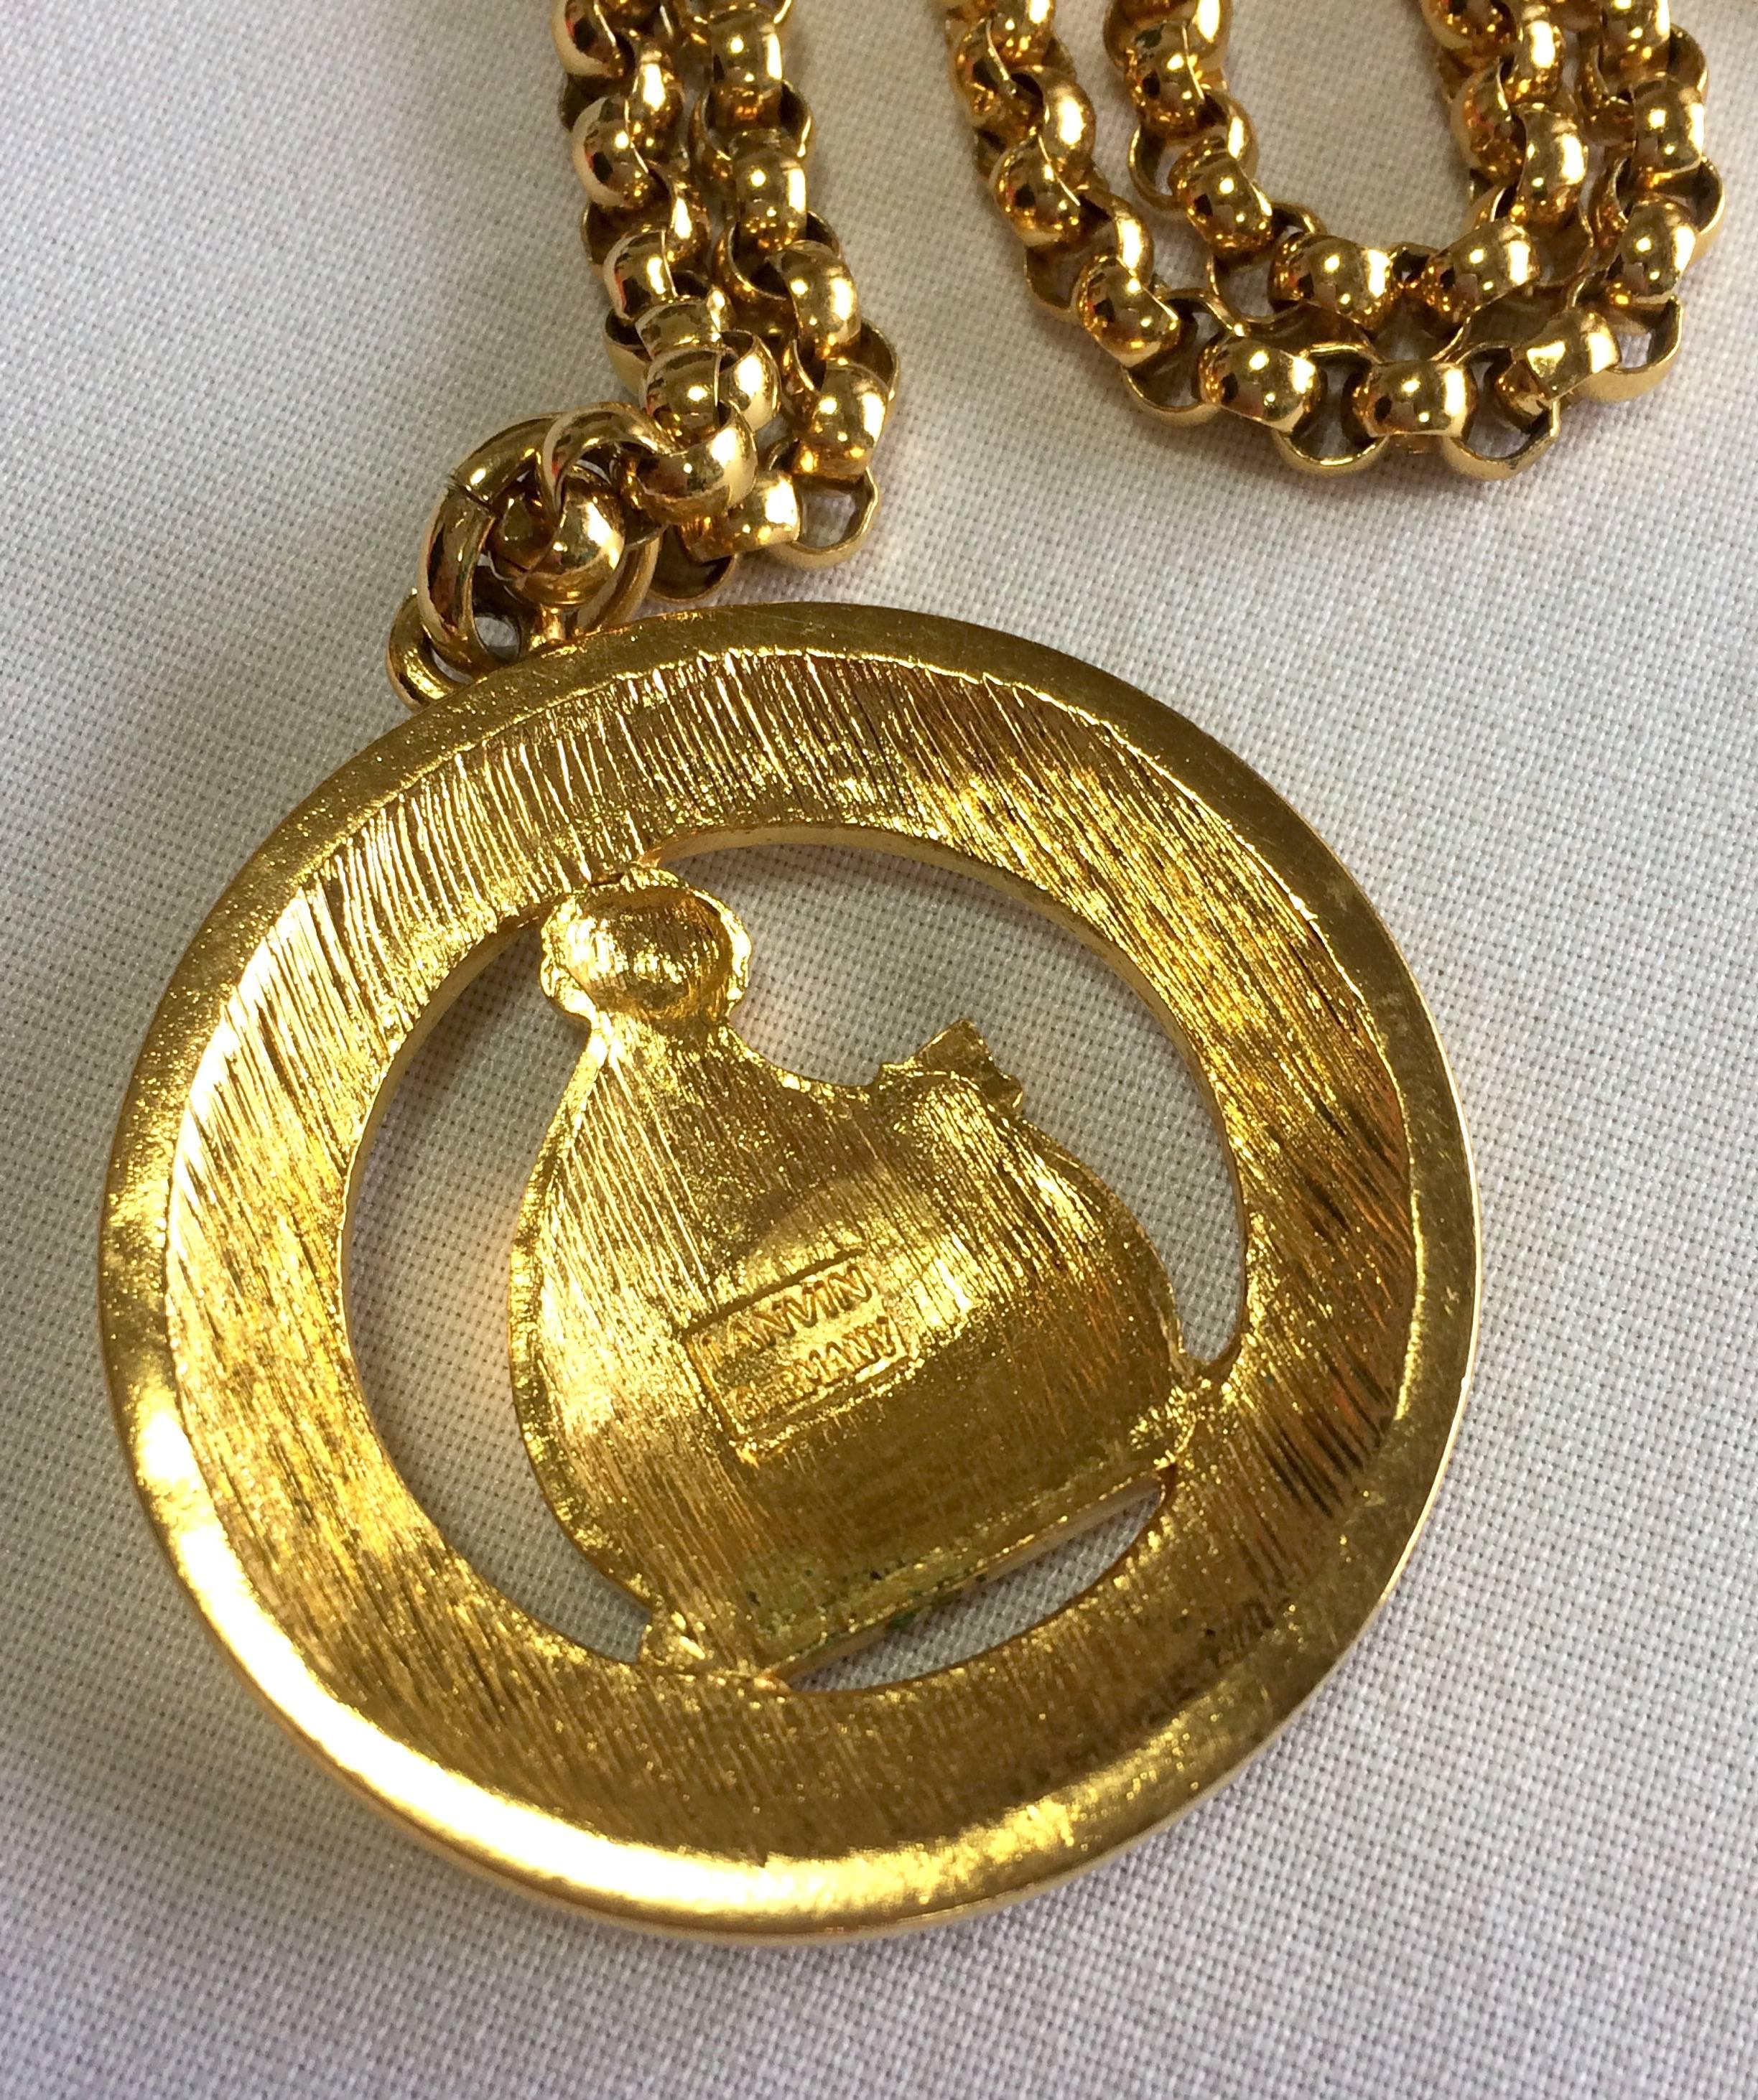 Women's MINT. Vintage LANVIN golden chain necklace with large logo pendant top. Germany.